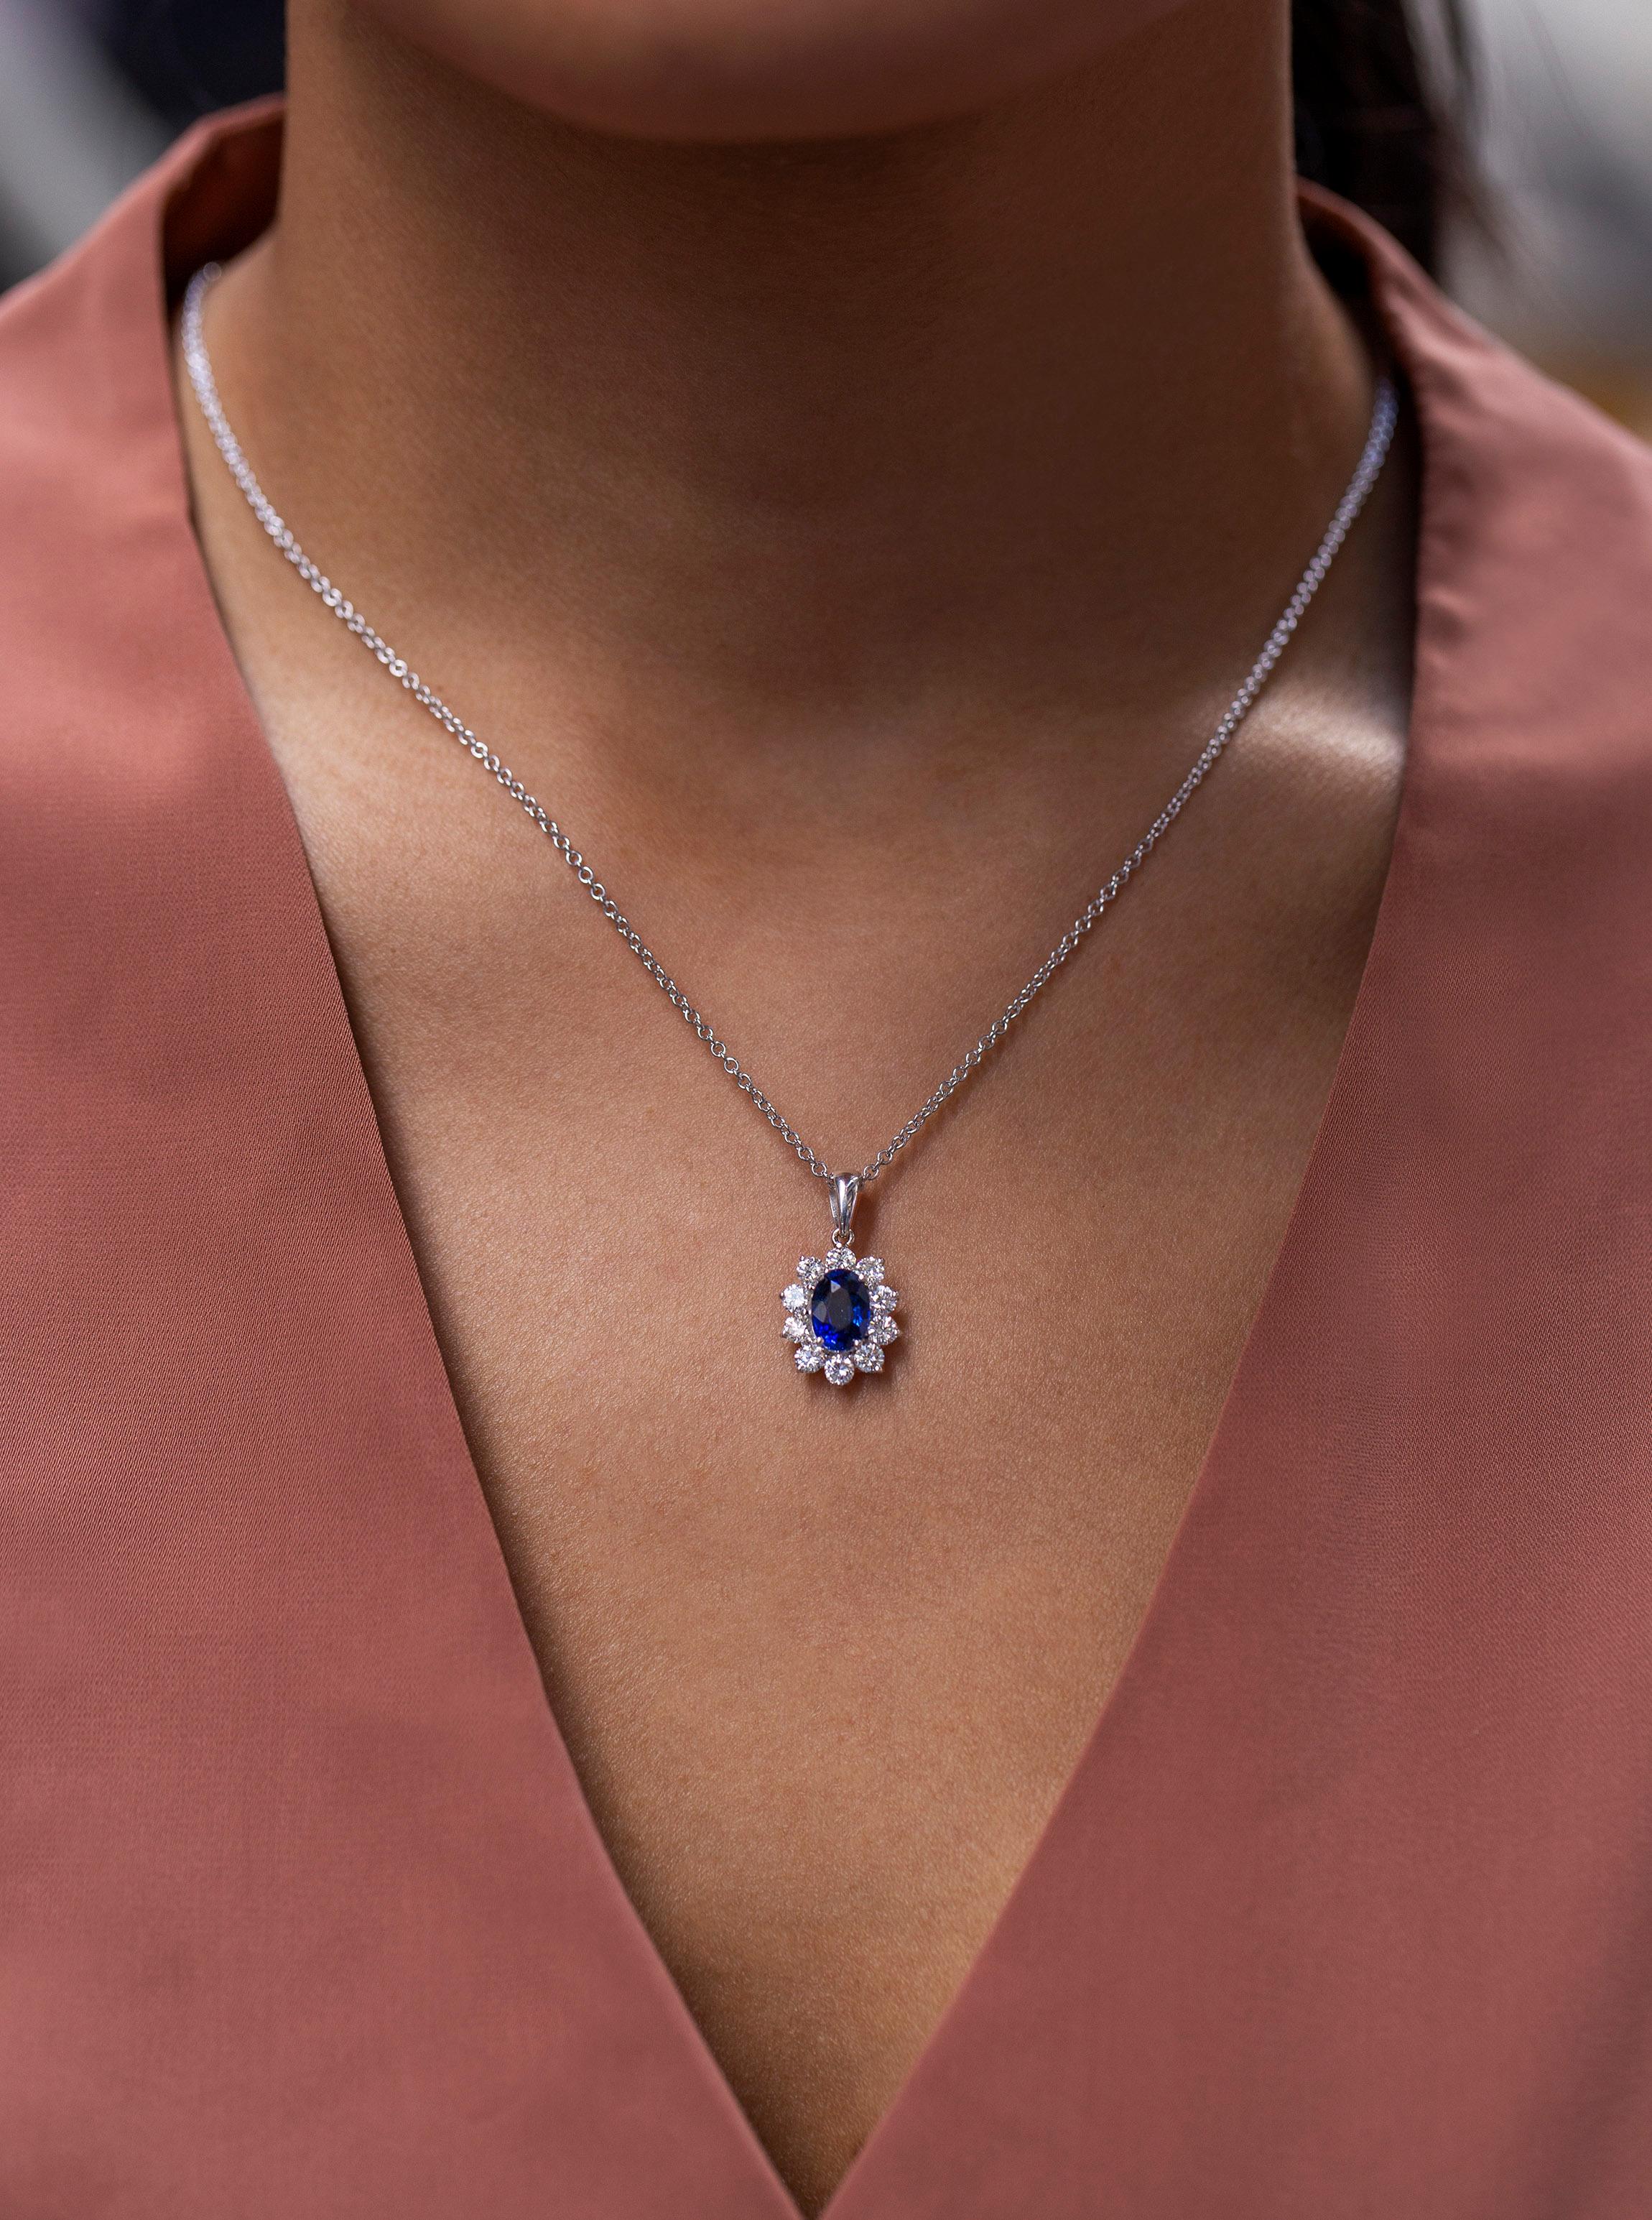 Oval Cut Roman Malakov 1.90 Carat Blue Sapphire and Diamond Pendant Necklace